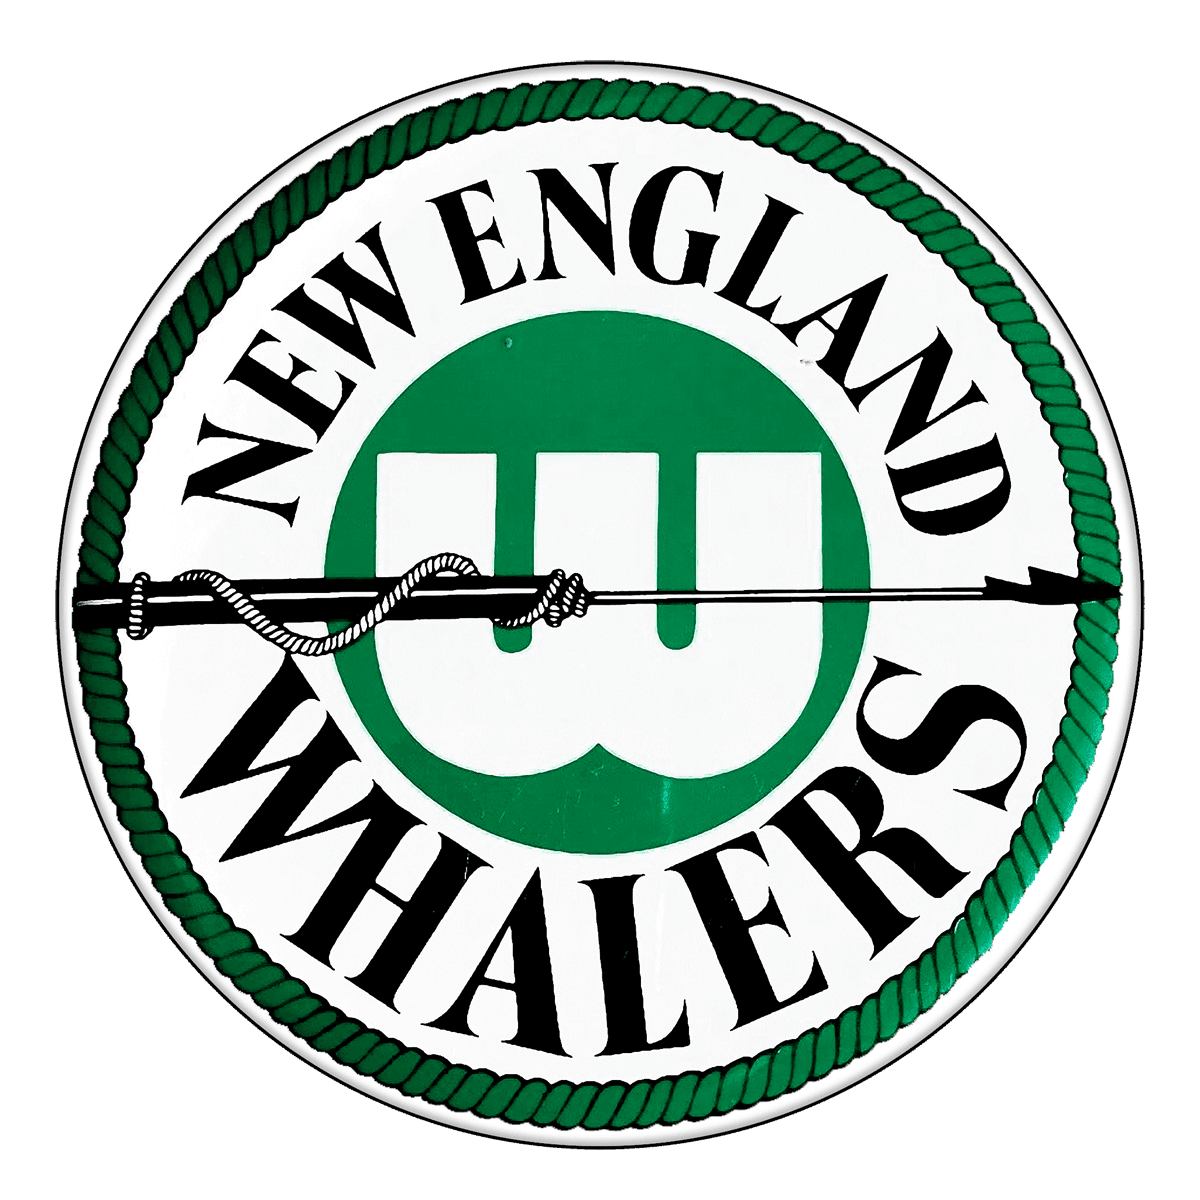 New England Whalers Logo 1973-1979